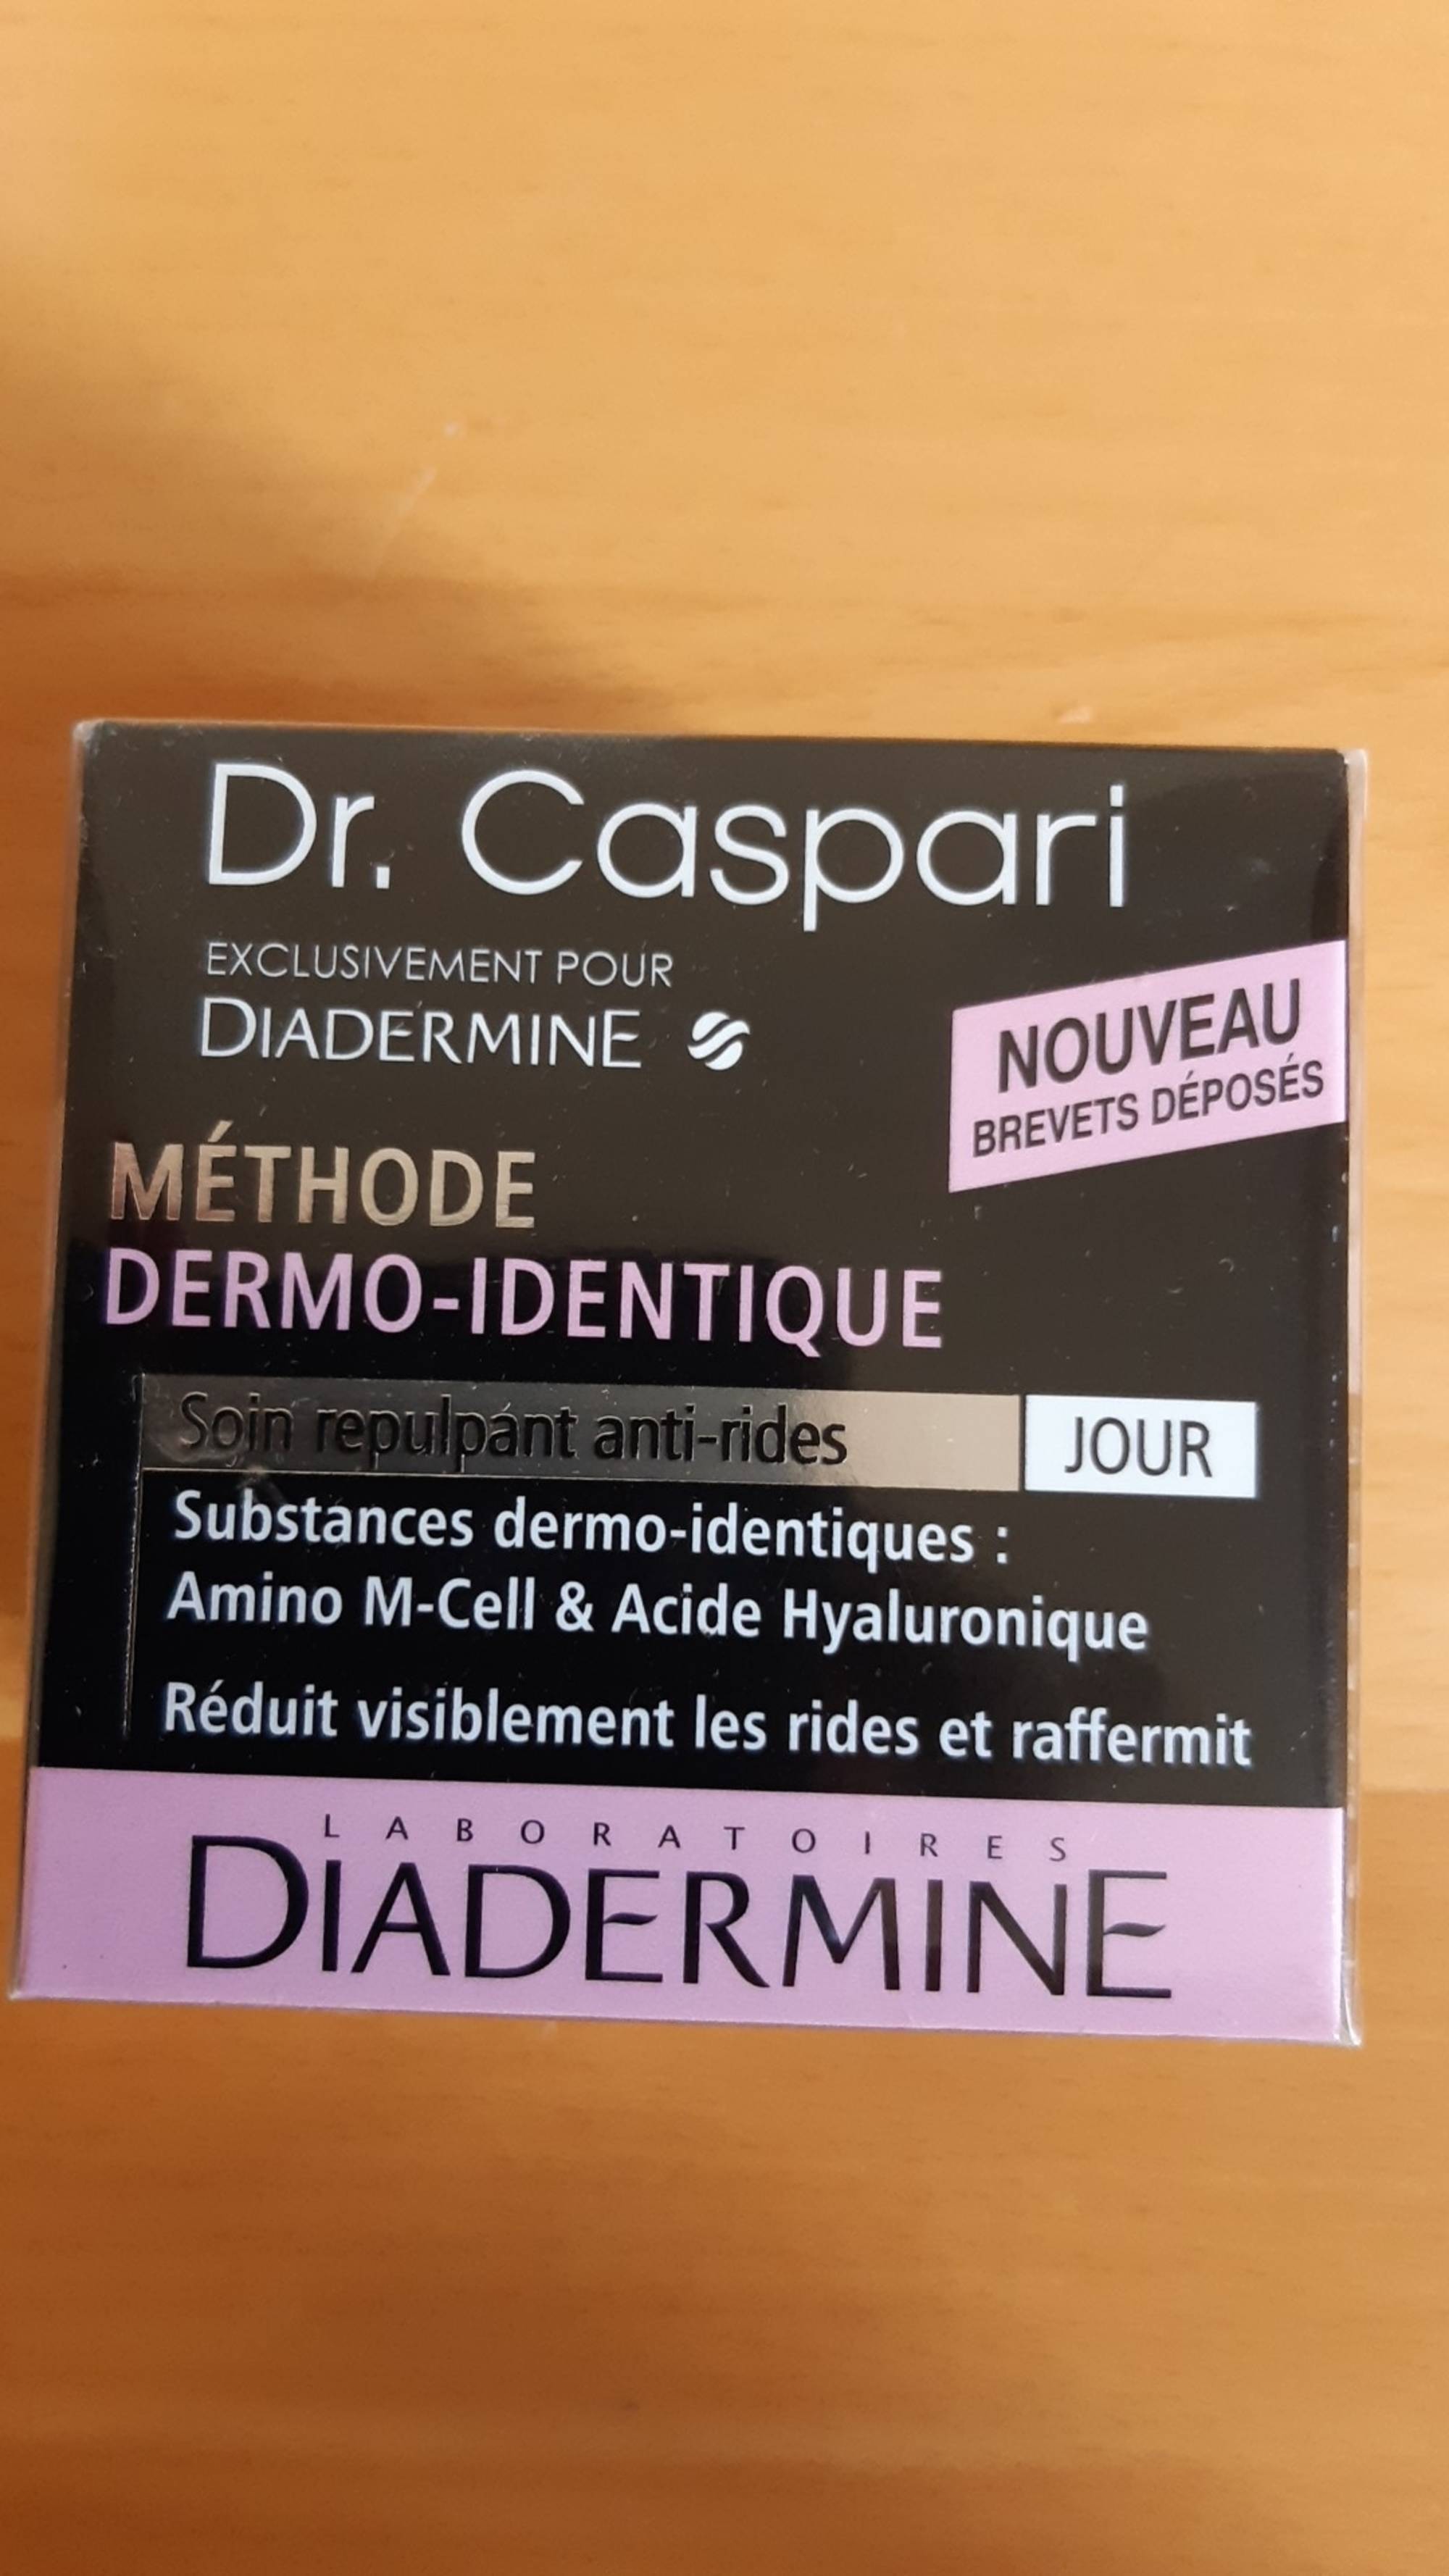 DIADERMINE - Dr. Caspari - Soin repulpant anti rides jour